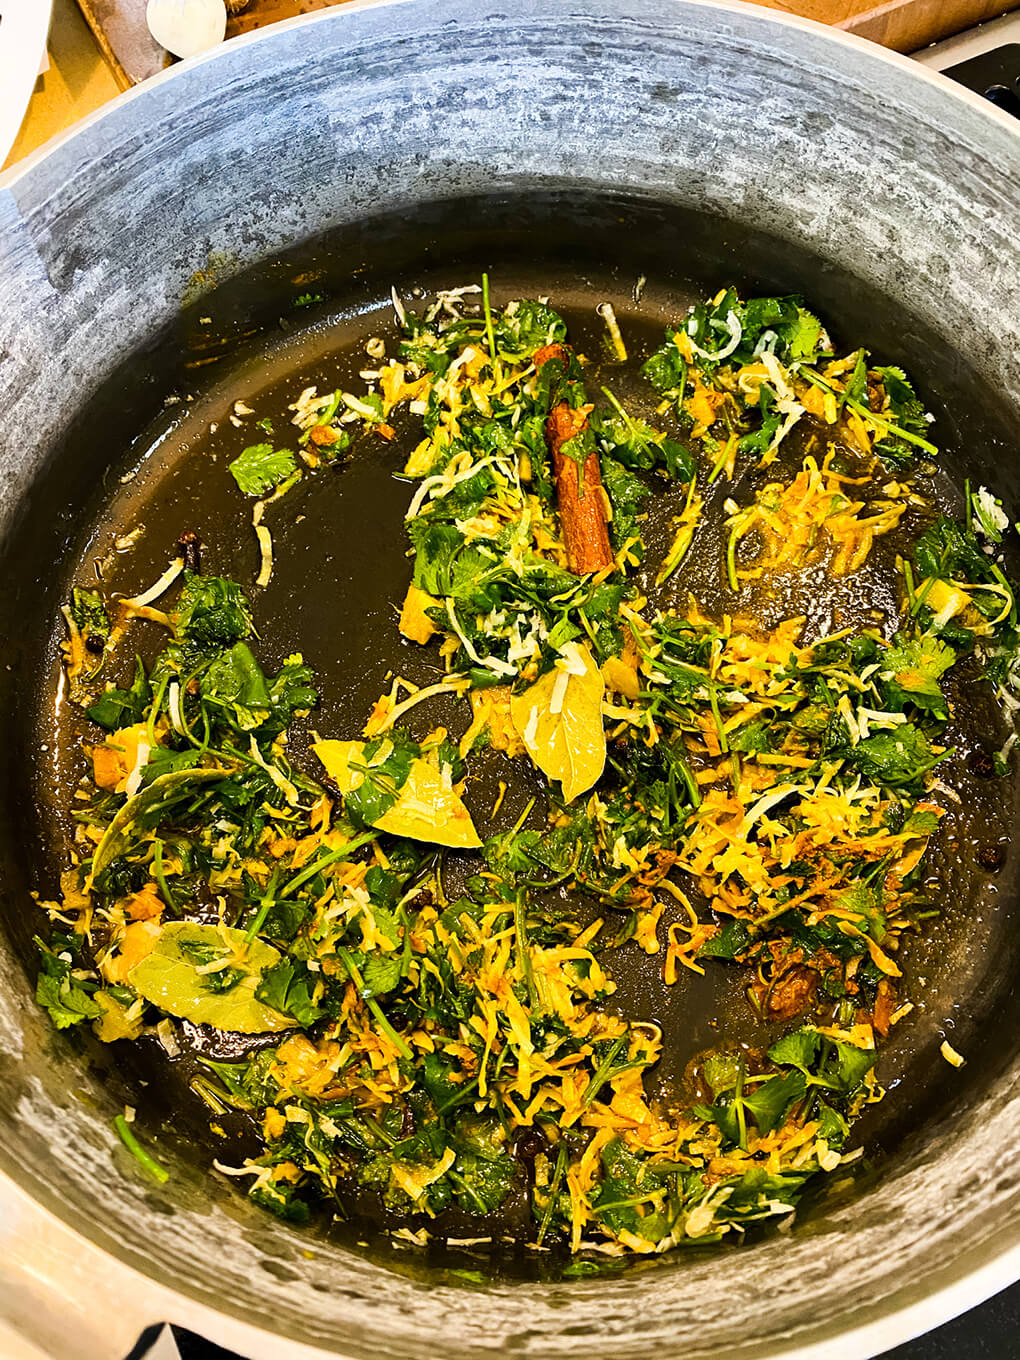 One Pot Kitchari Recipe agutsygirl.com #kitchari #kitcharicleanse #onepotmeals #glutenfreerecipes spices